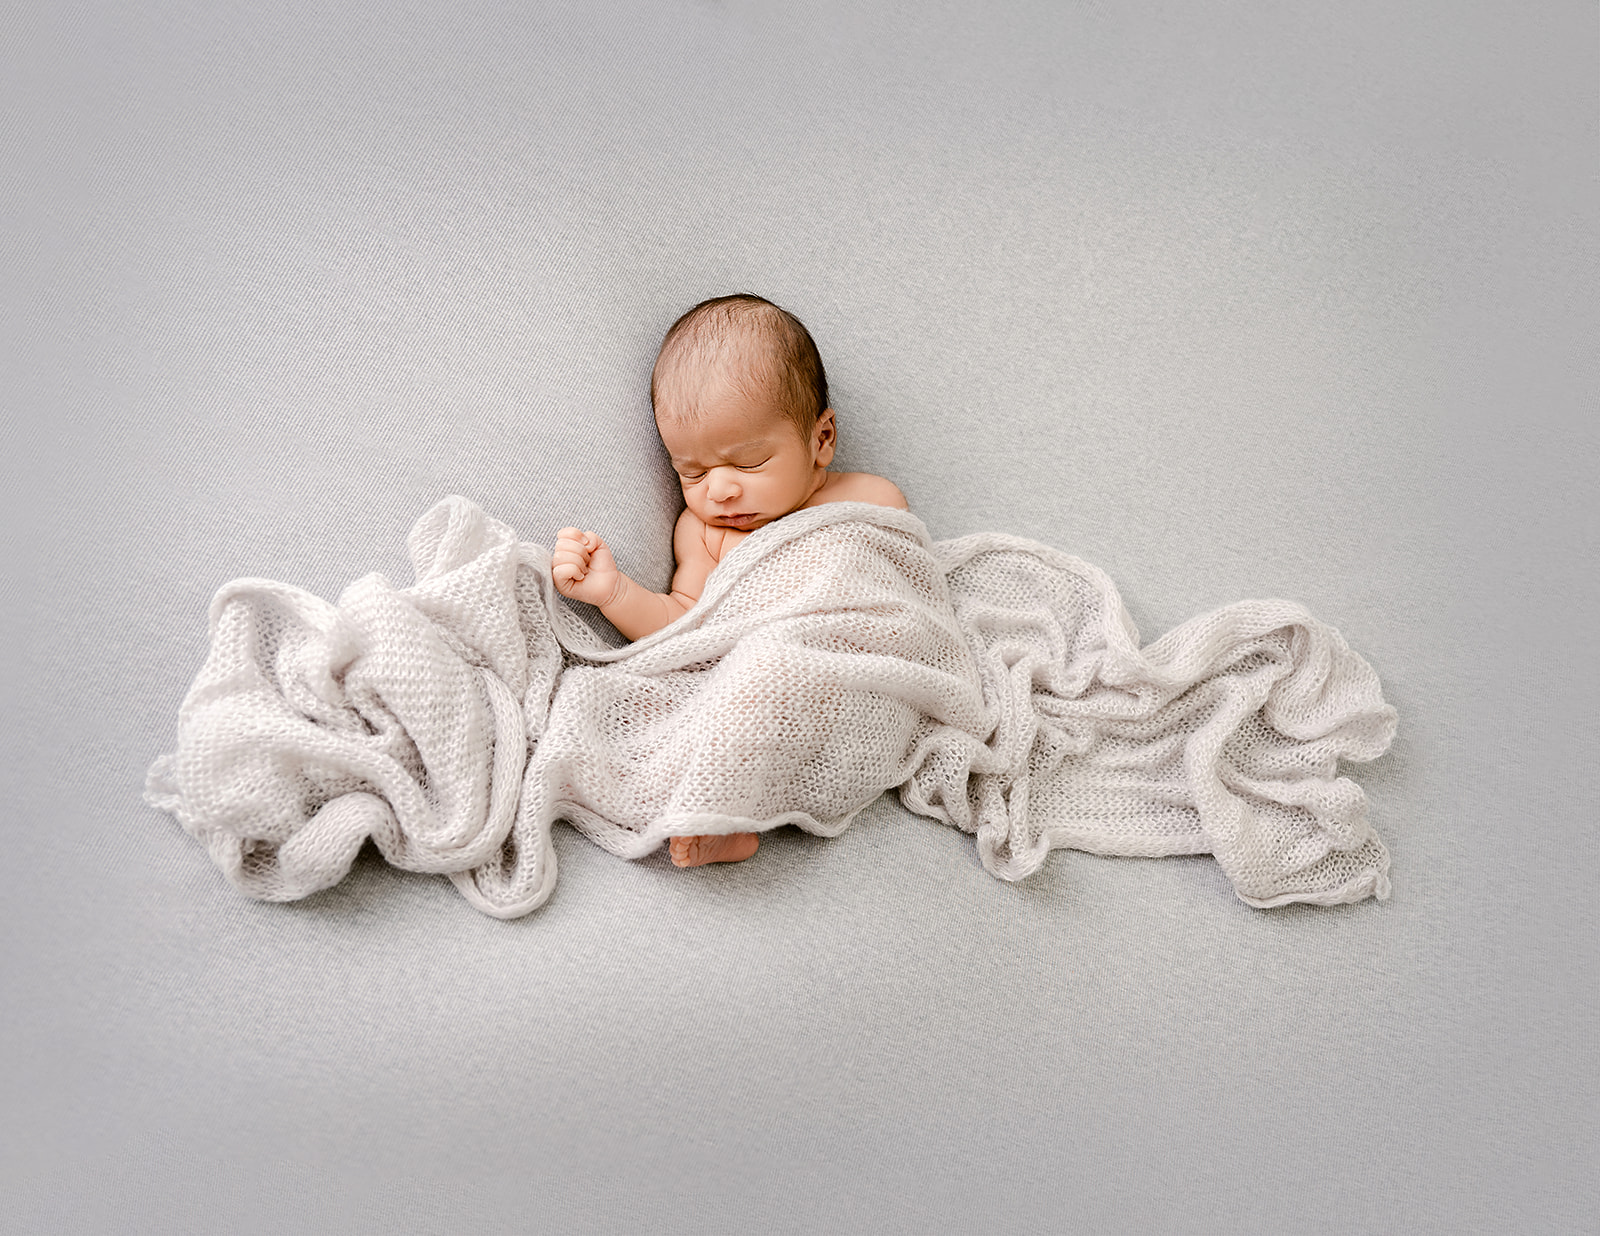 Grey newborn | Princeton MN Newborn Photography Studio | Safety Certified Newborn Photographer with 10 years experience